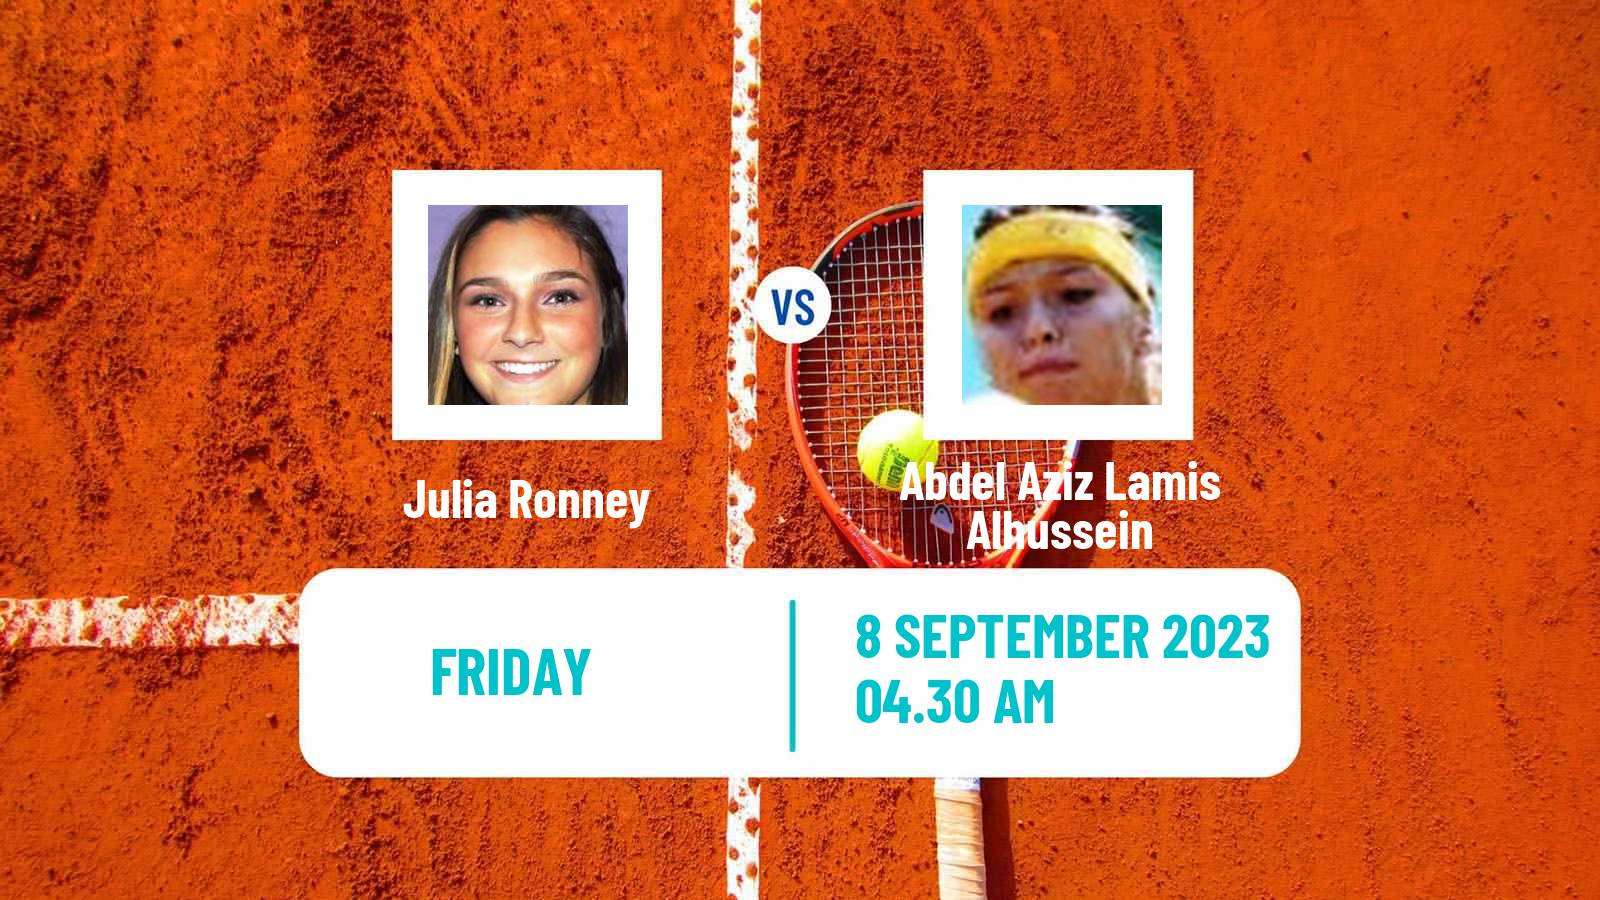 Tennis ITF W15 Monastir 31 Women Julia Ronney - Abdel Aziz Lamis Alhussein